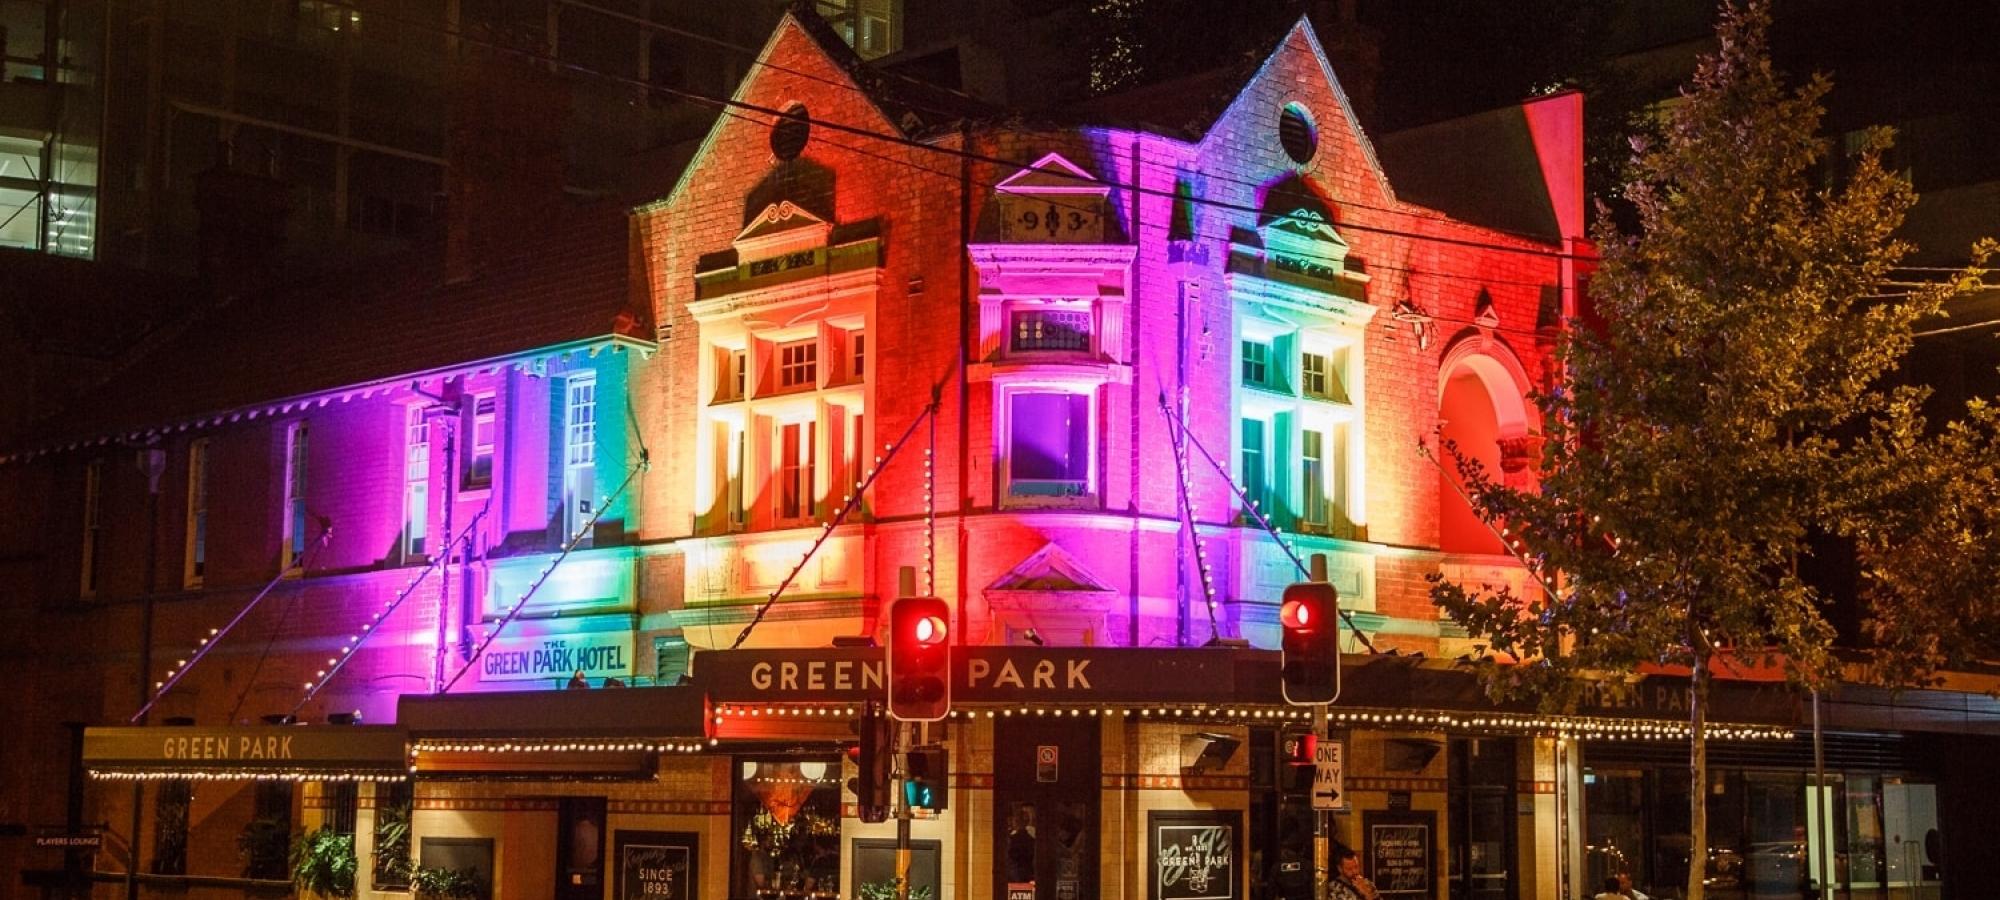 Green Park Hotel with rainbow lighting